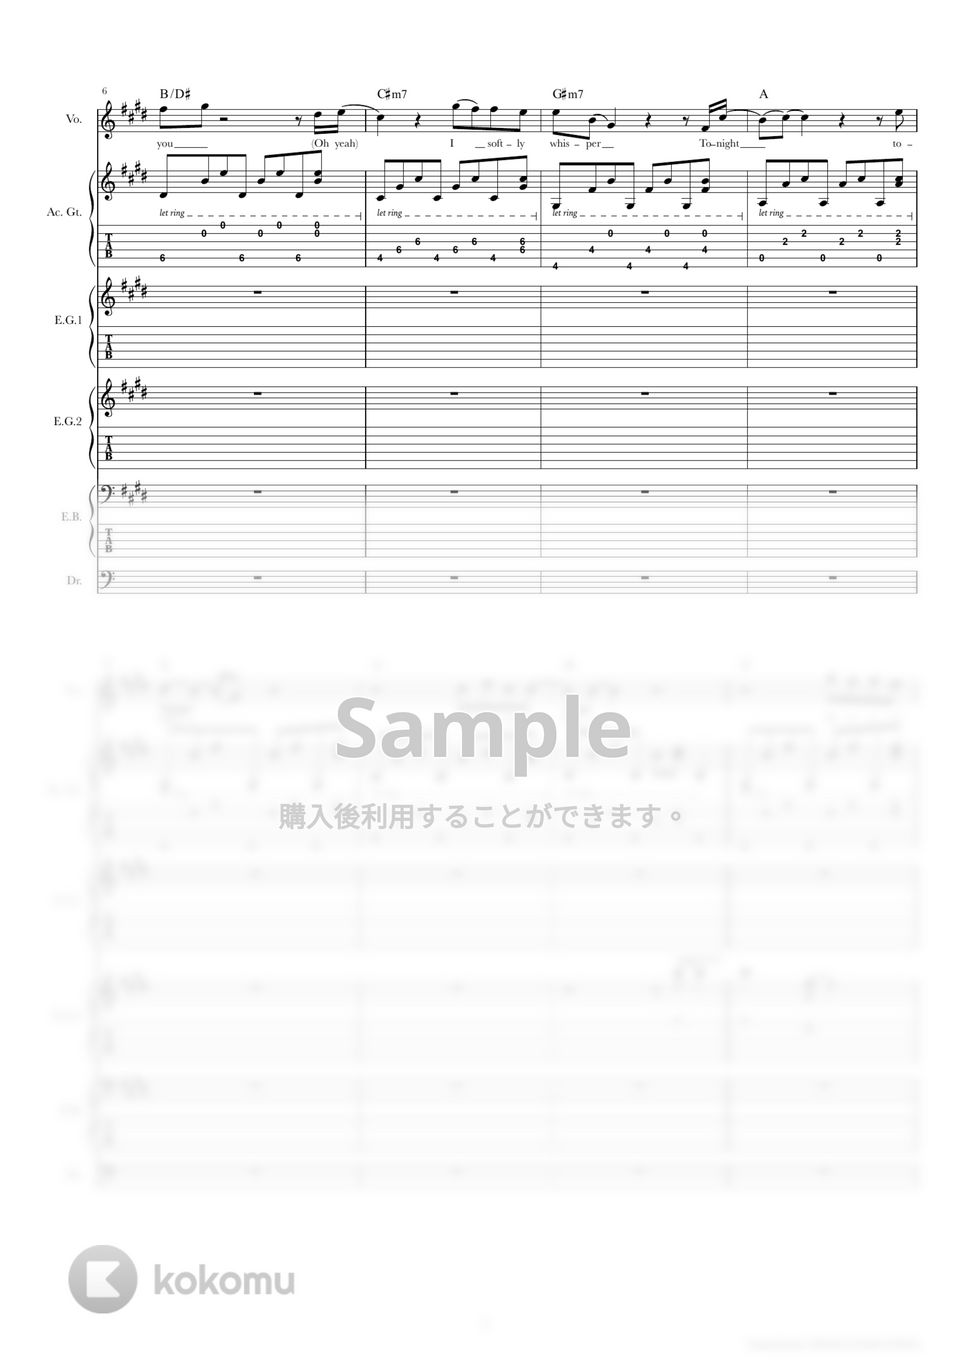 ONE OK ROCK - Wherever you are (バンドスコア) by TRIAD GUITAR SCHOOL